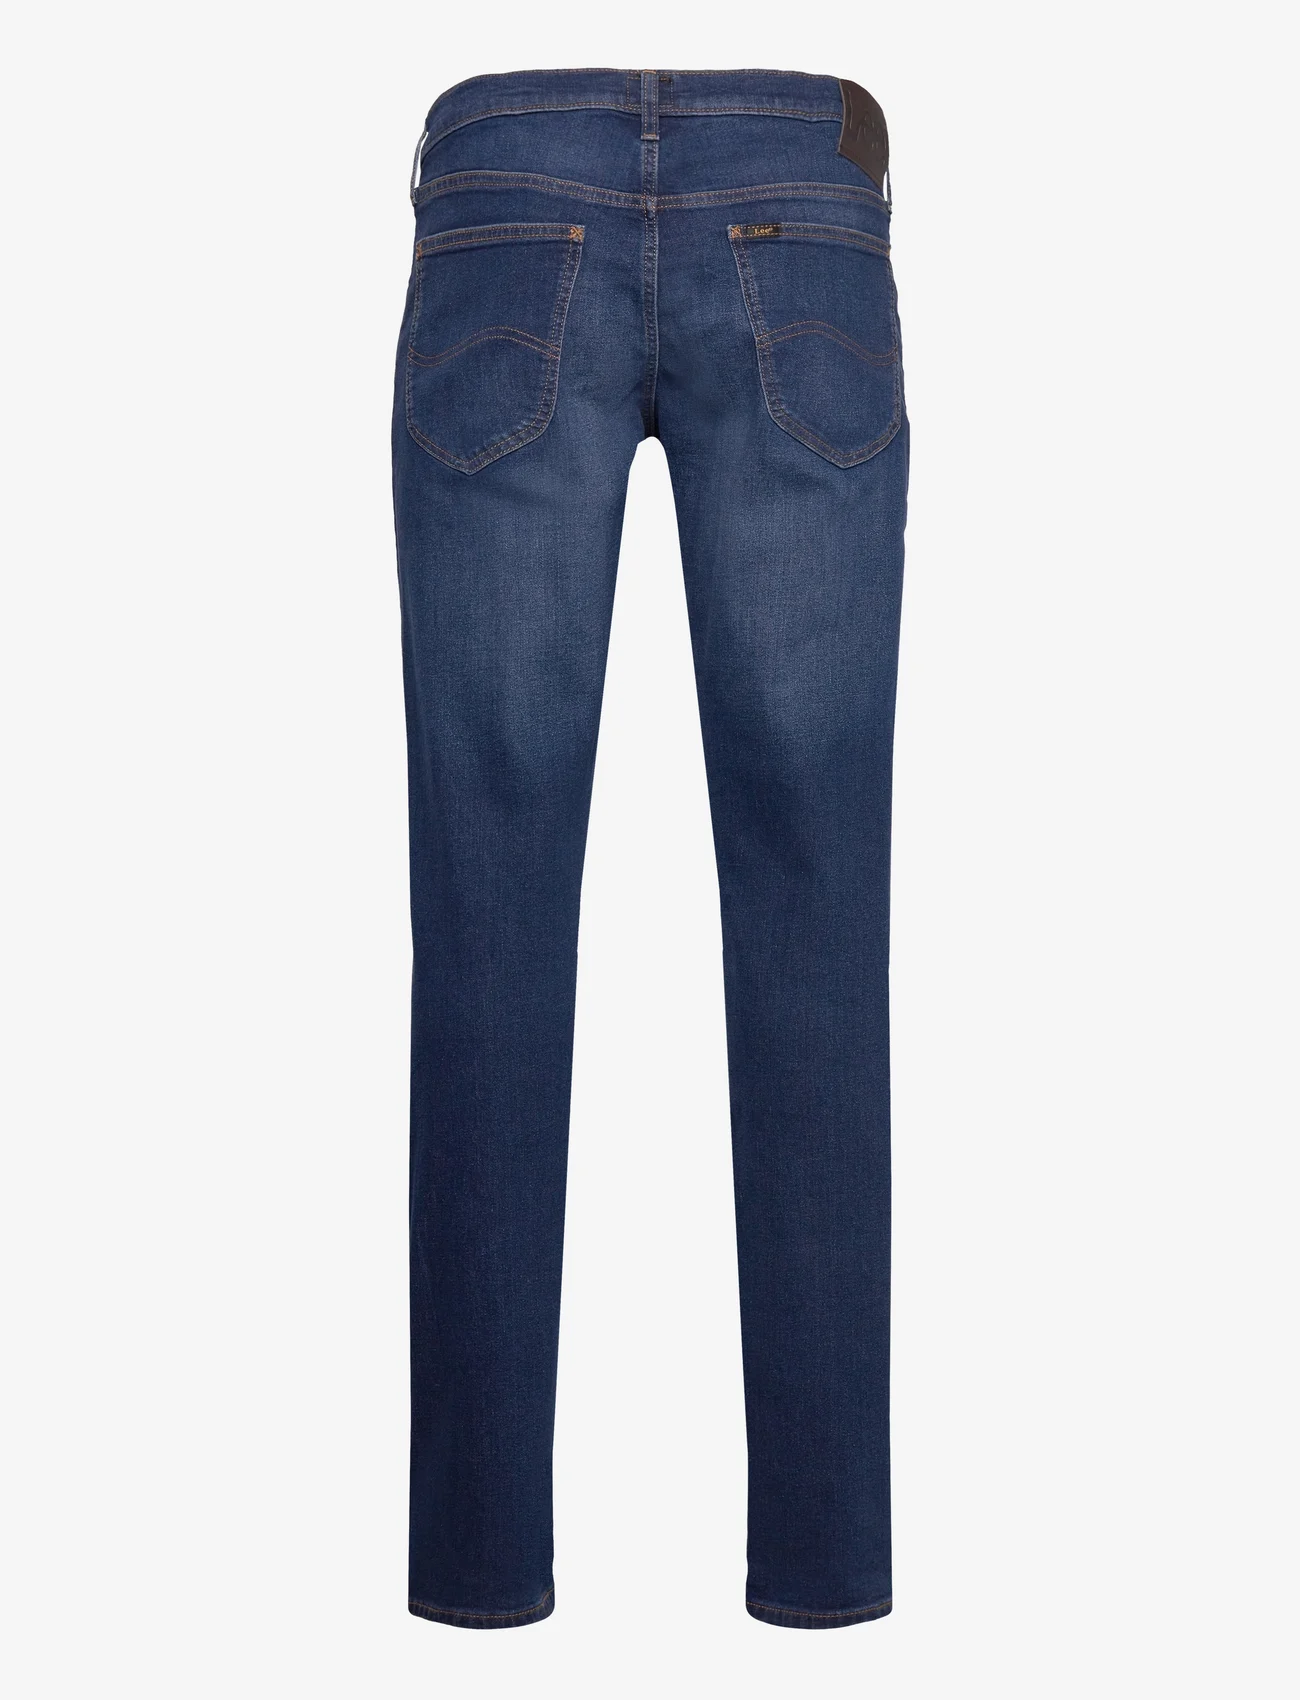 Lee Jeans - DAREN ZIP FLY - Įprasto kirpimo džinsai - dark worn - 1